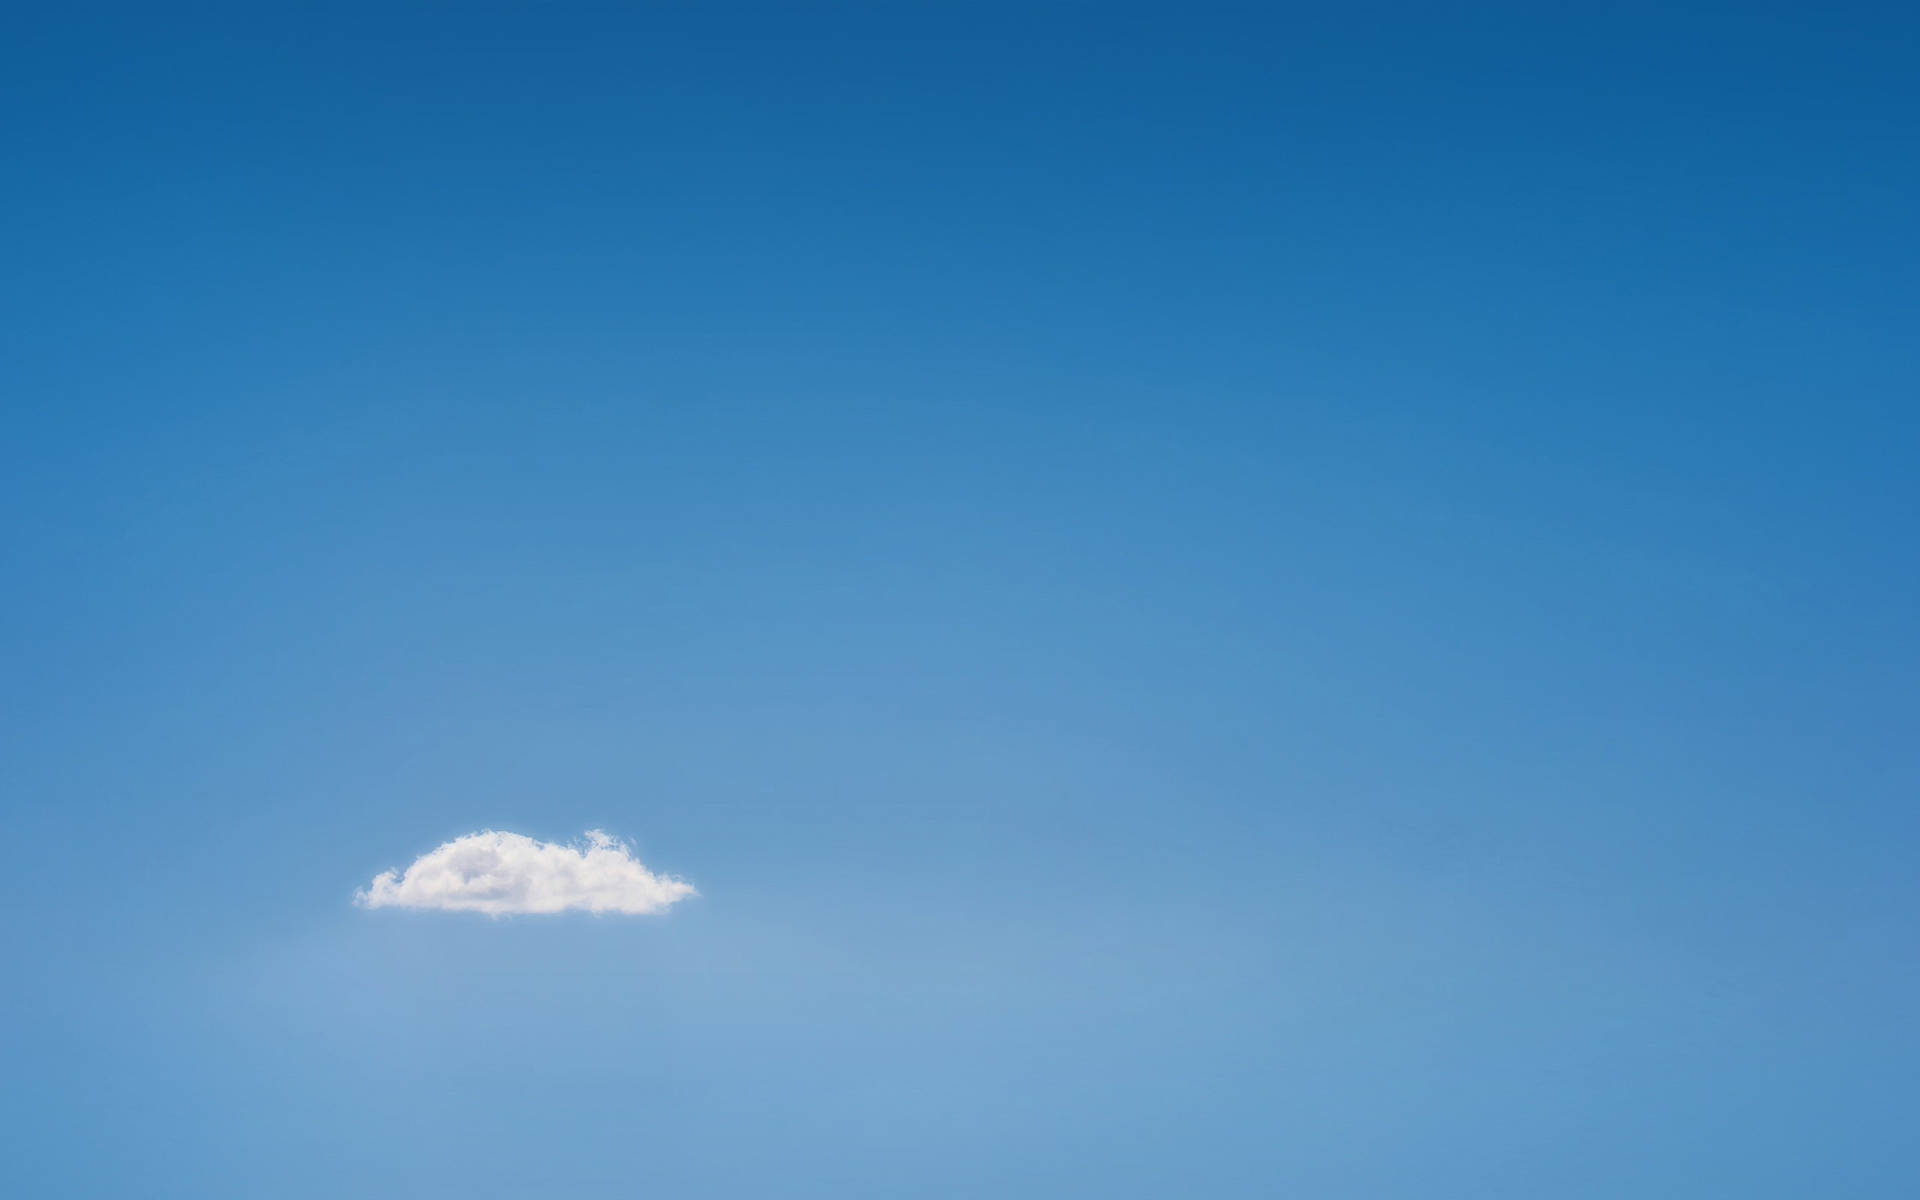 Macbookair Einsamer Wolken Wallpaper